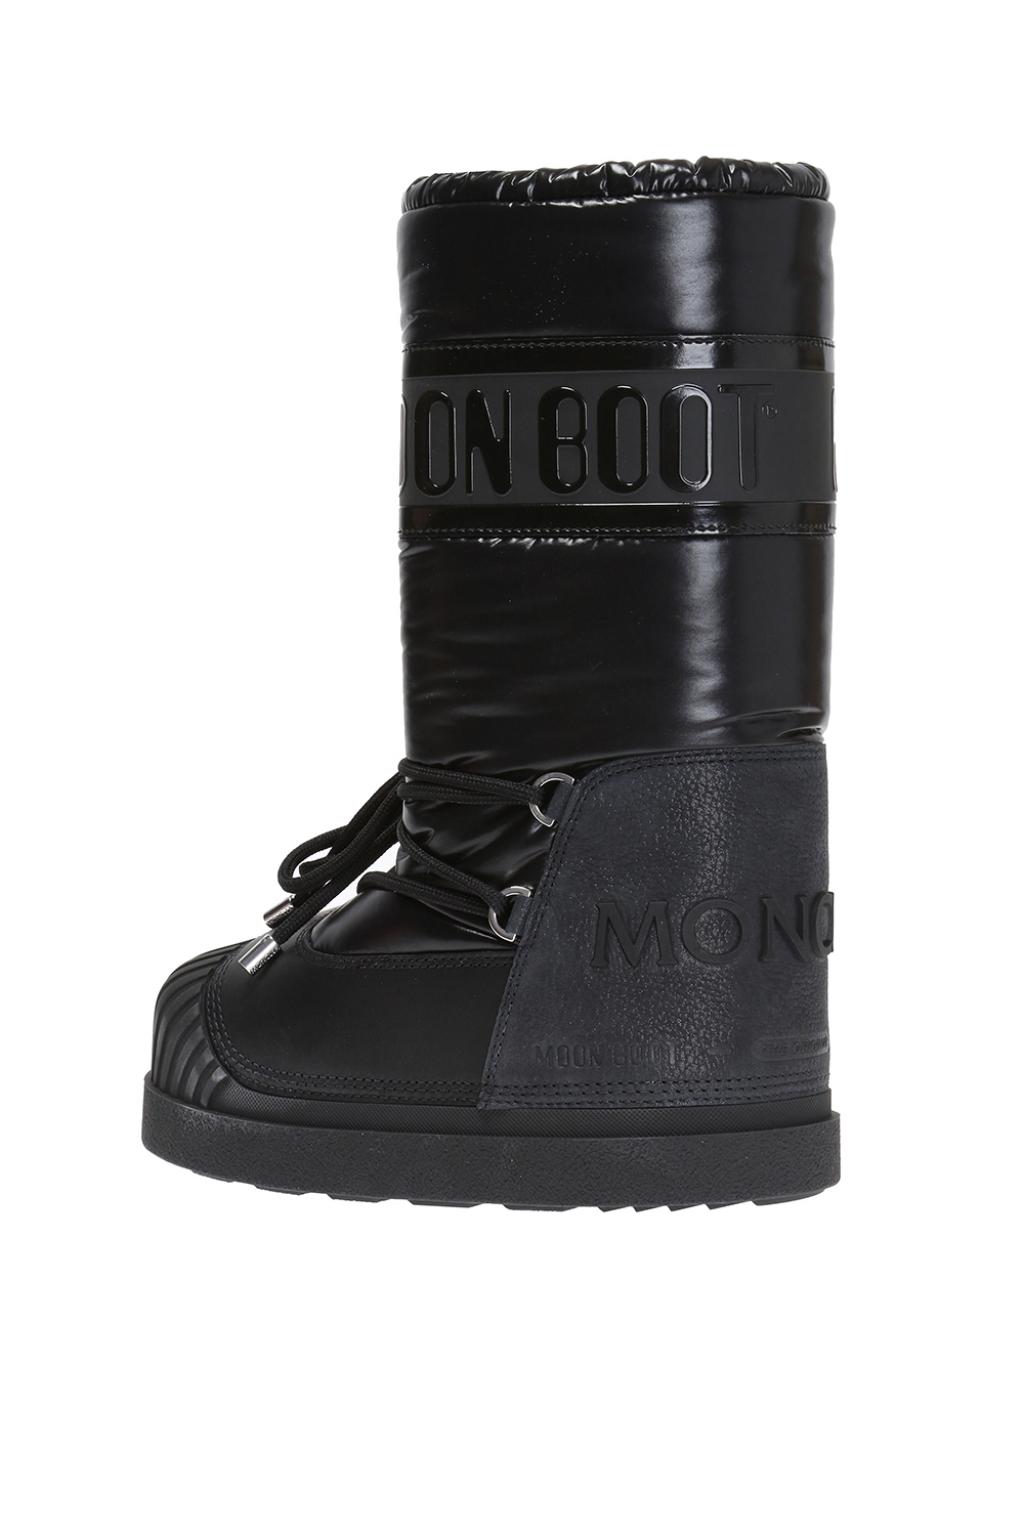 moncler x moon boot